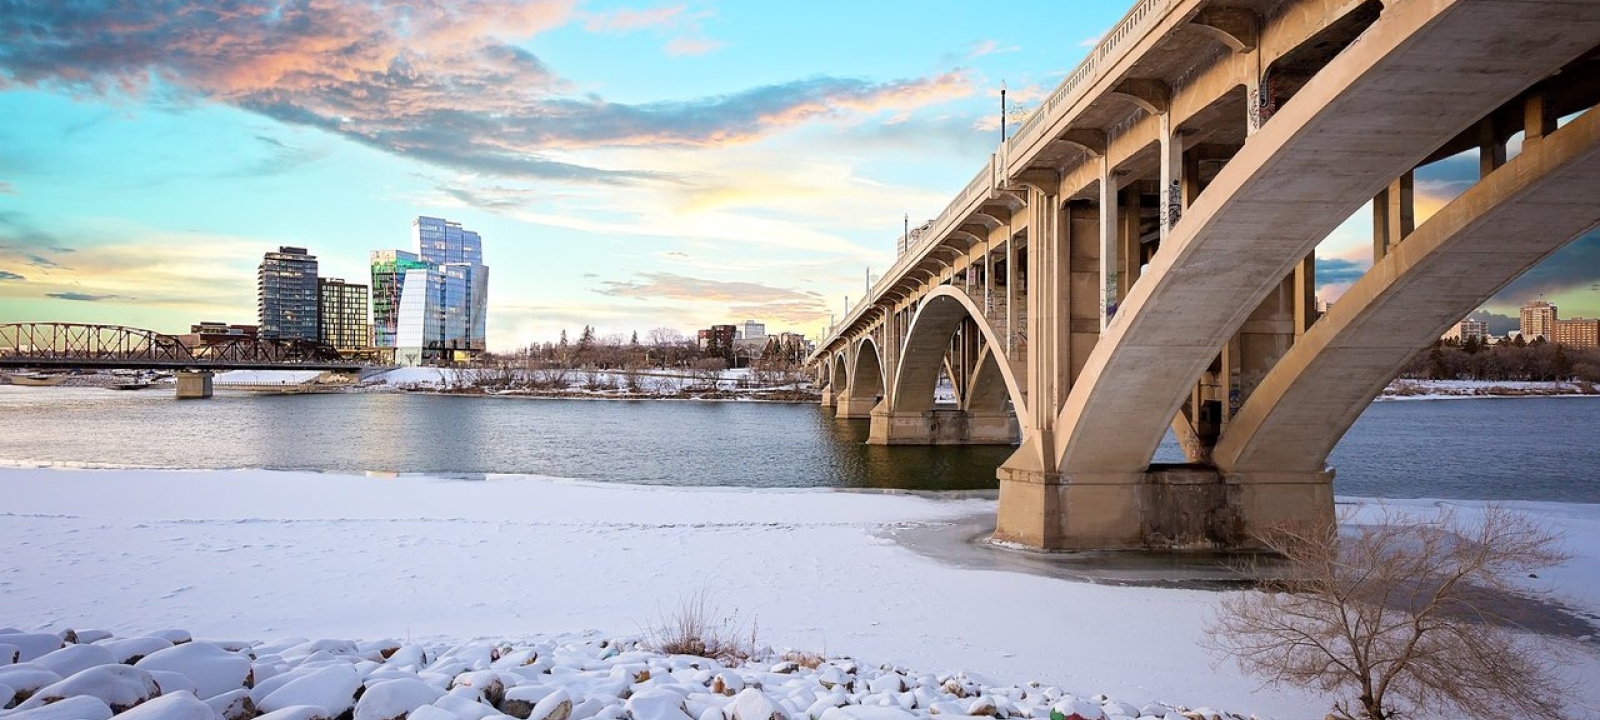 Winter Wonderland: Explore architecture in Saskatoon this season